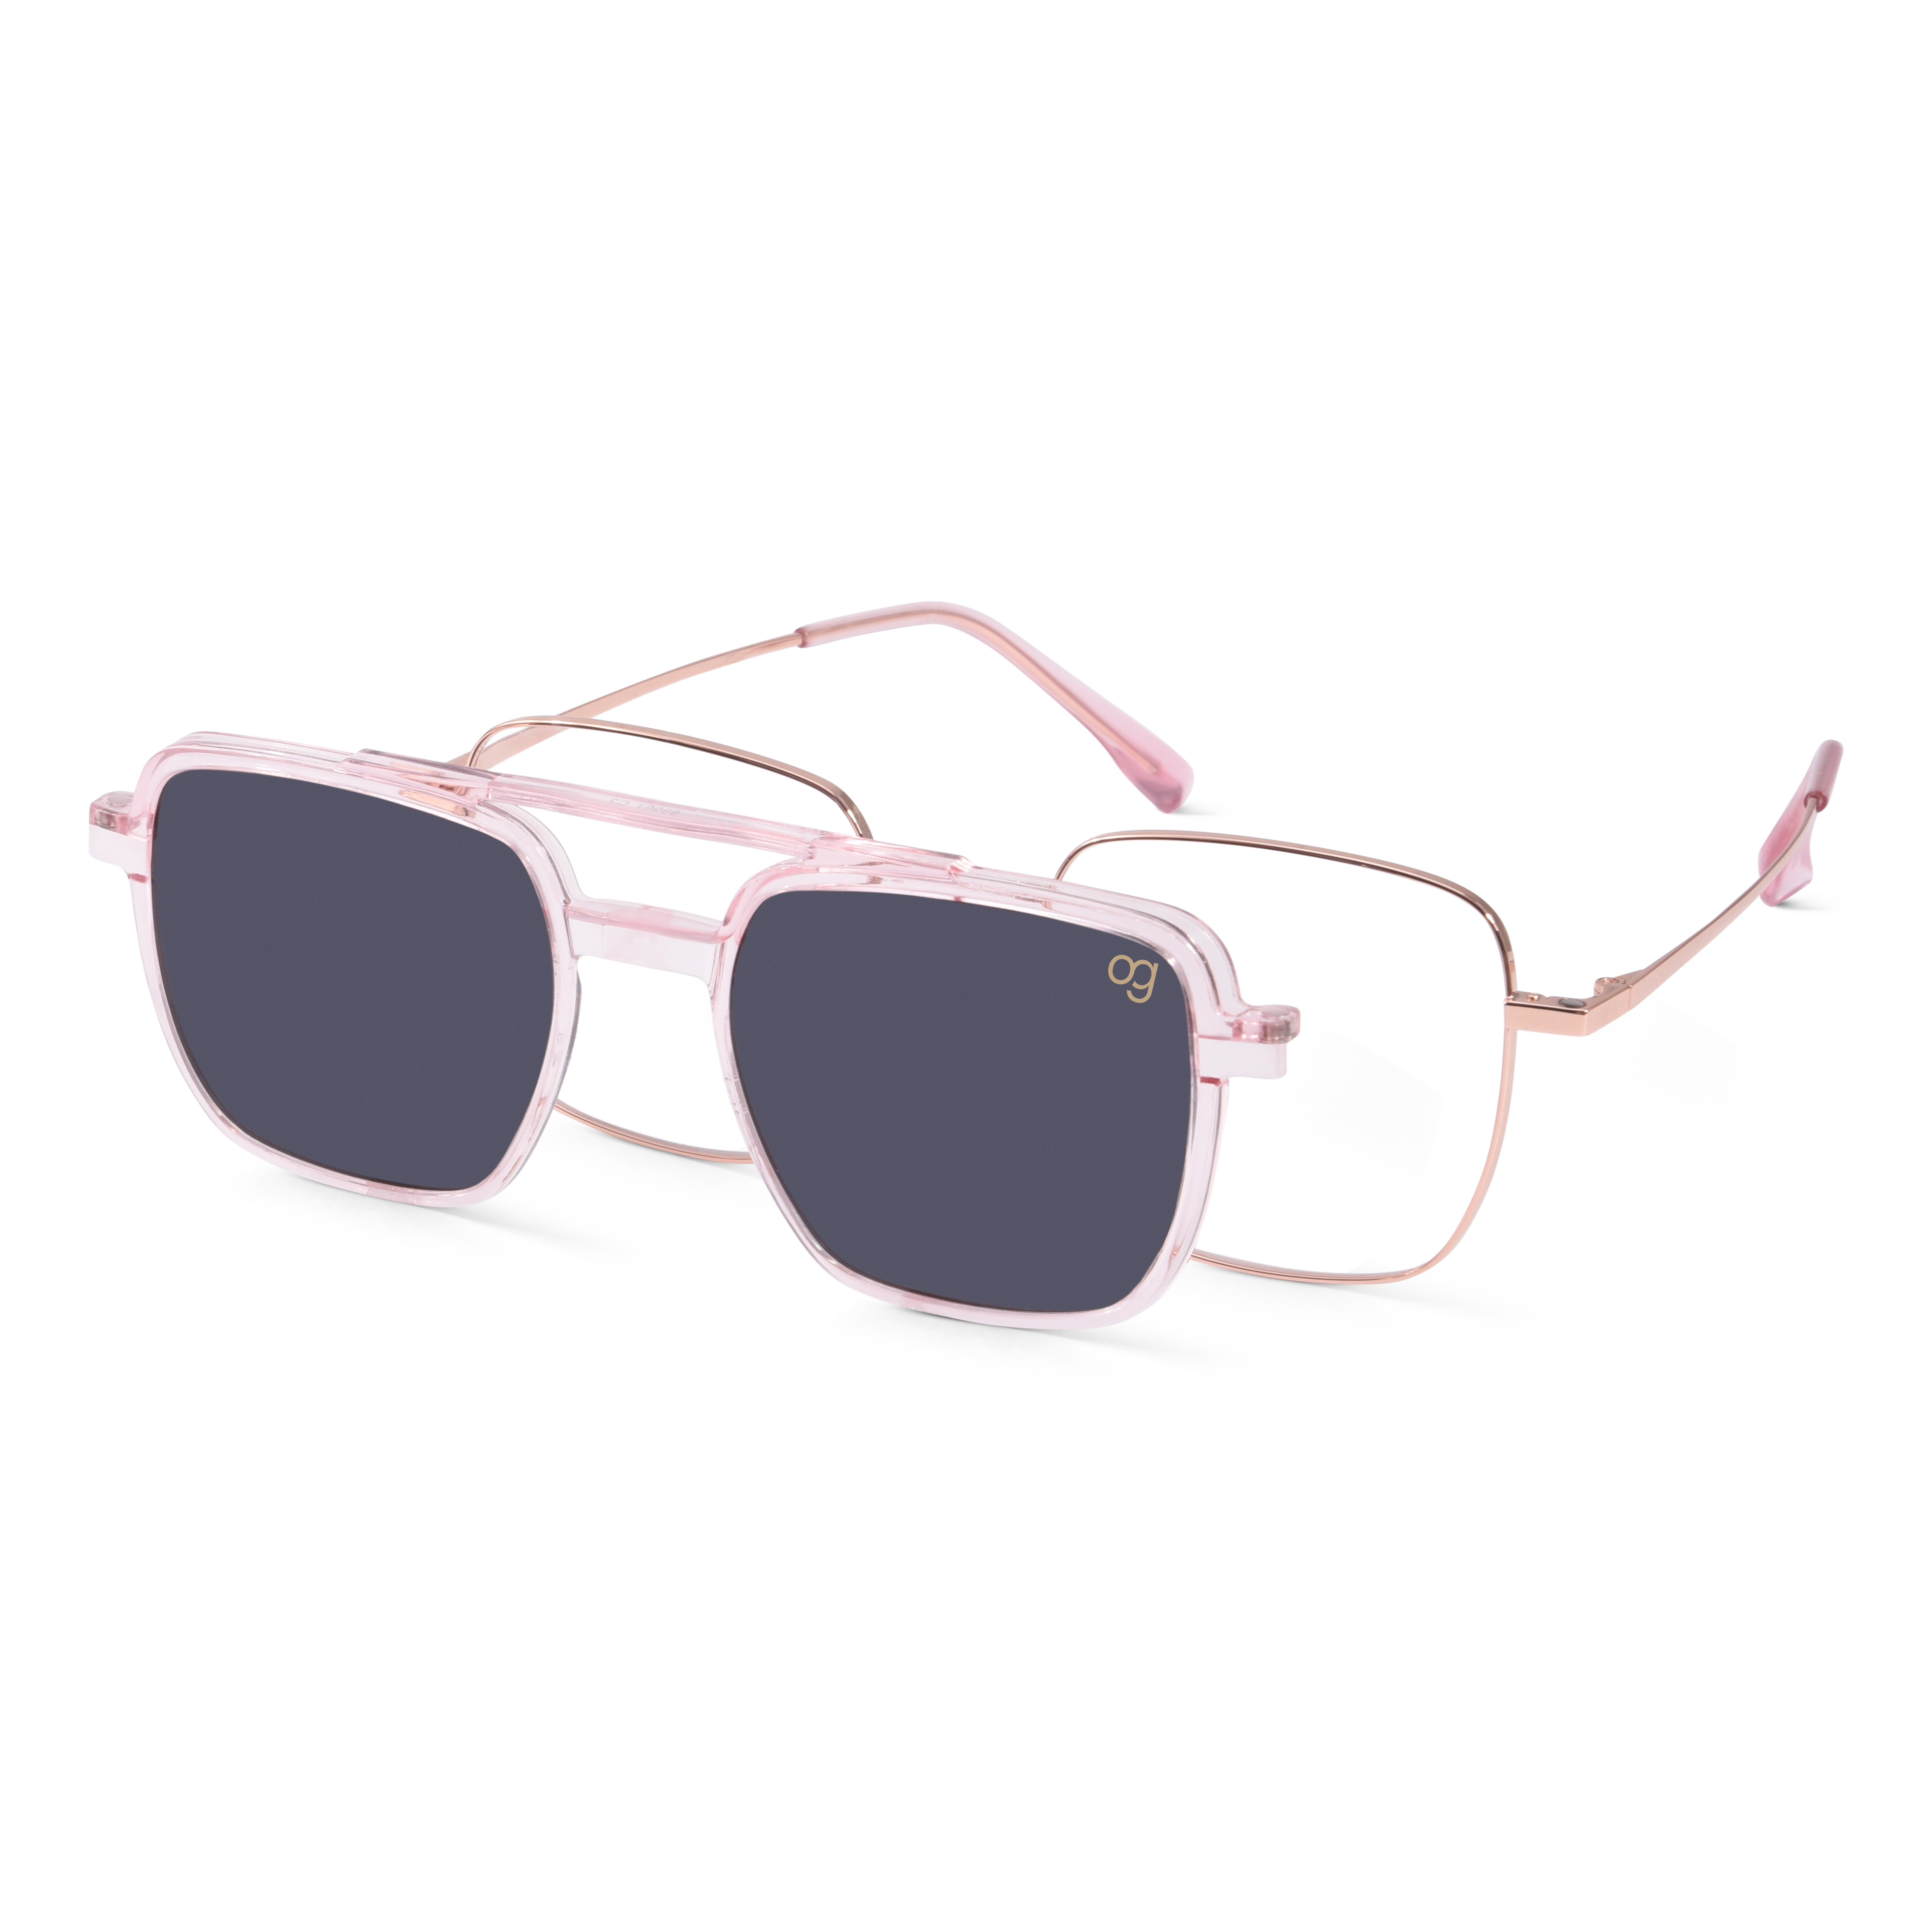 Buy Clip On Sunglasses For Men - 2 Sunglasses @999 - Woggles